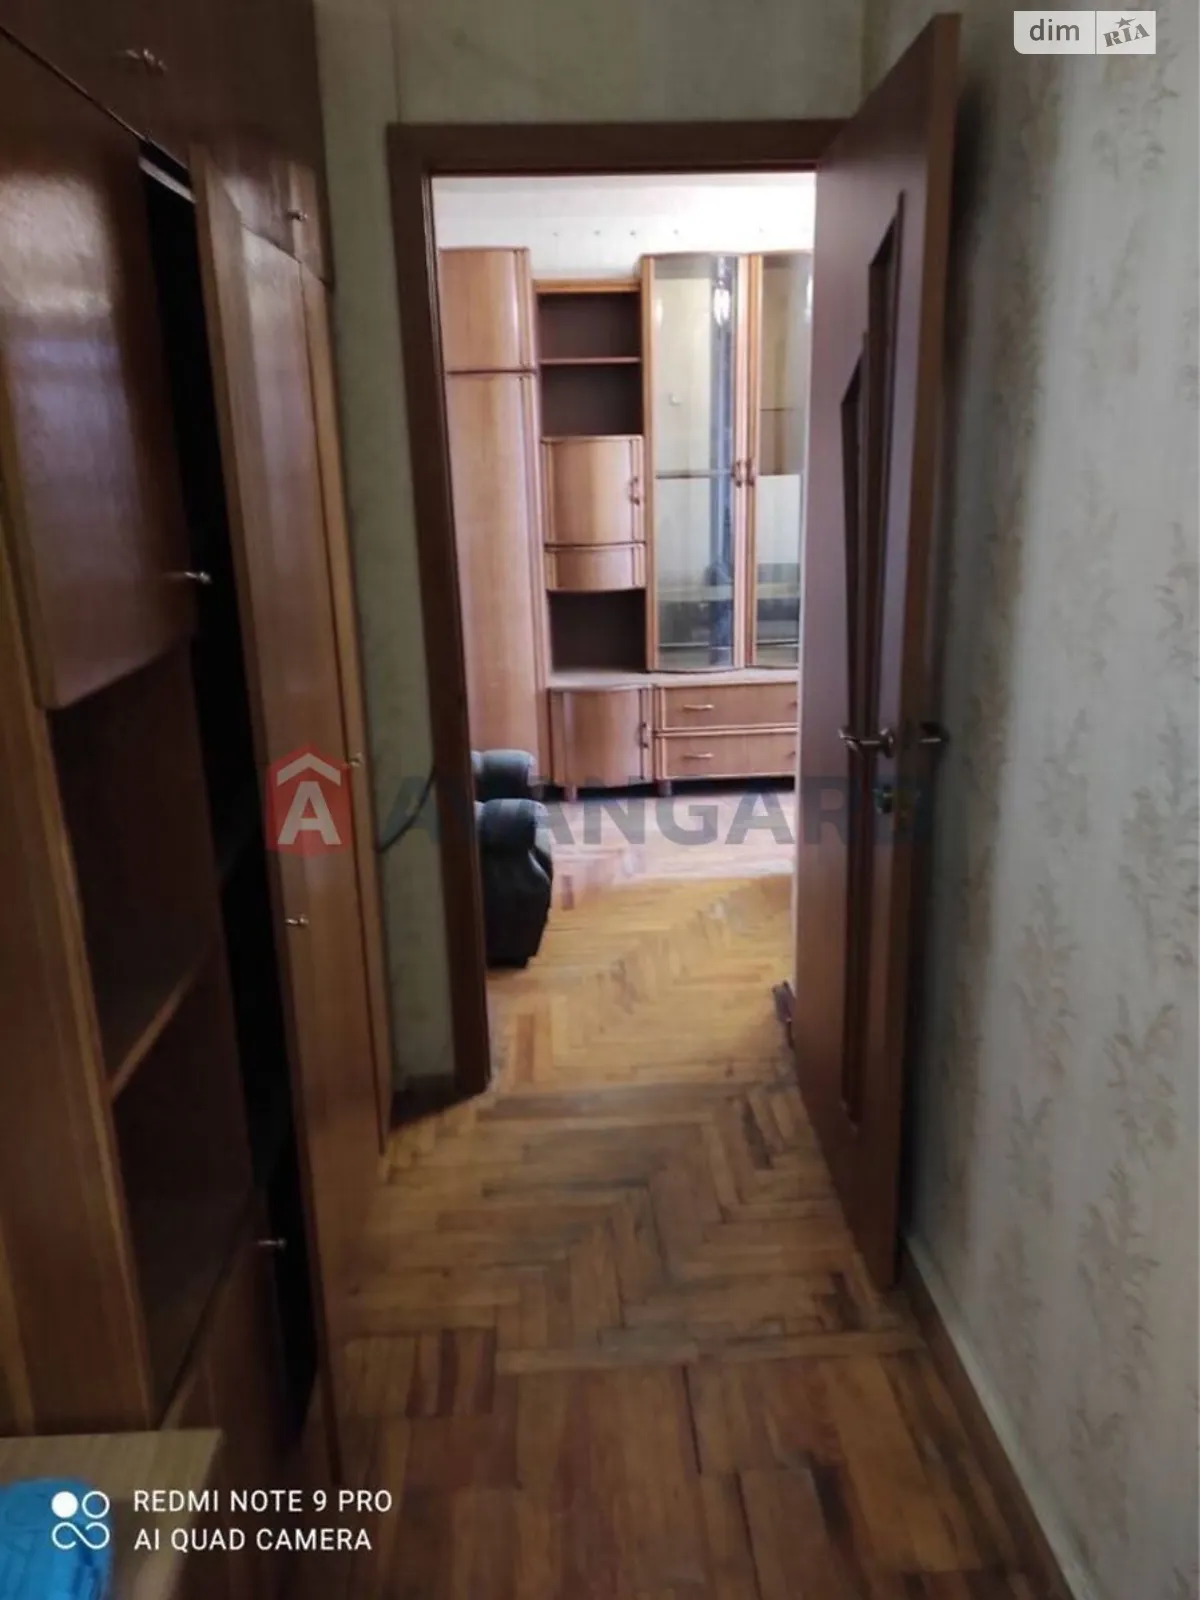 2-комнатная квартира 46 кв. м в Запорожье, ул. Тбилисская, 29 - фото 3